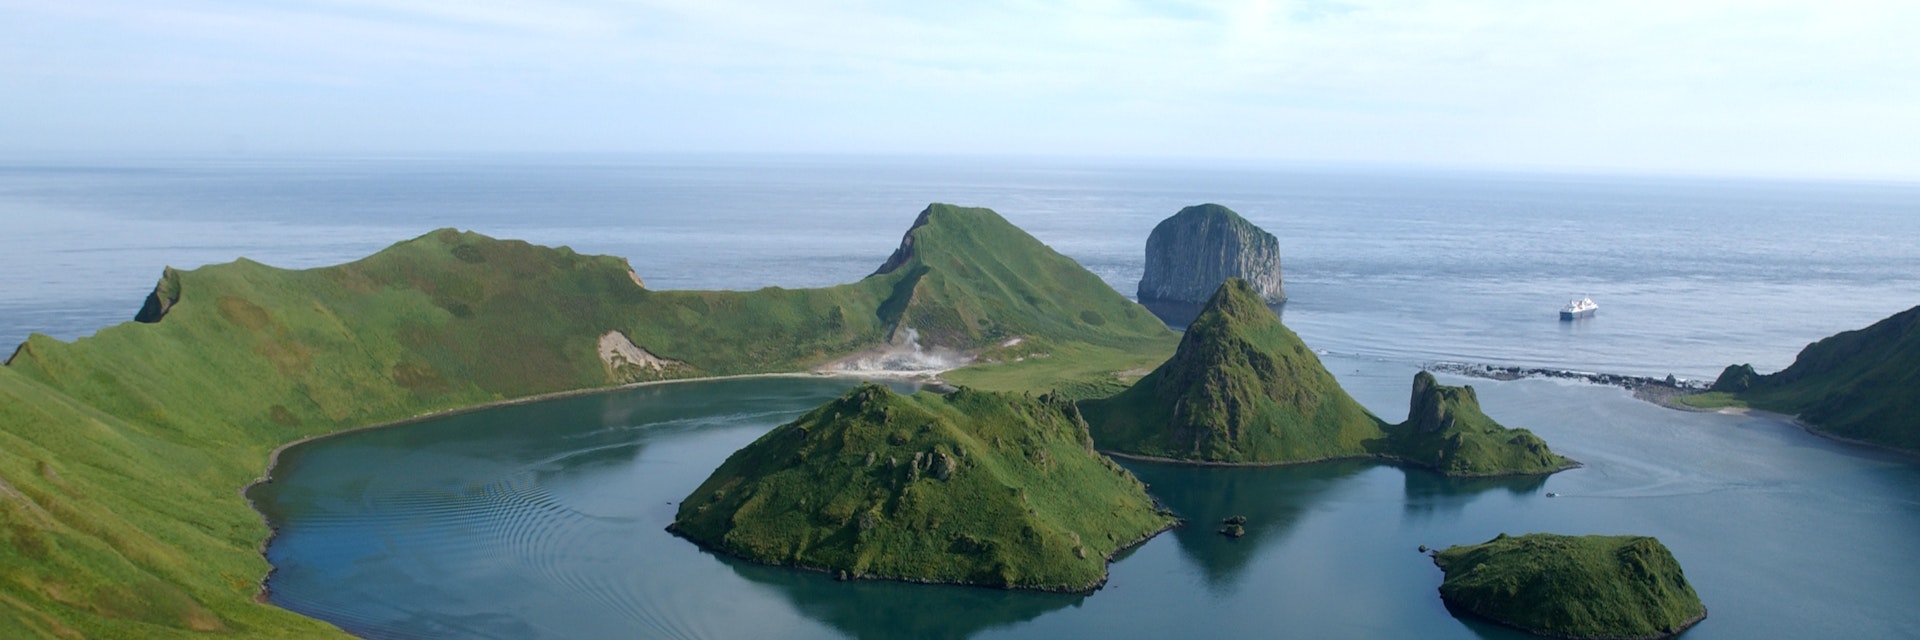 Asia, Russia, Russian Far East, Kamchatkan Peninsula, Kuril Islands, Yankicha Island. Bay with small mountainous islands